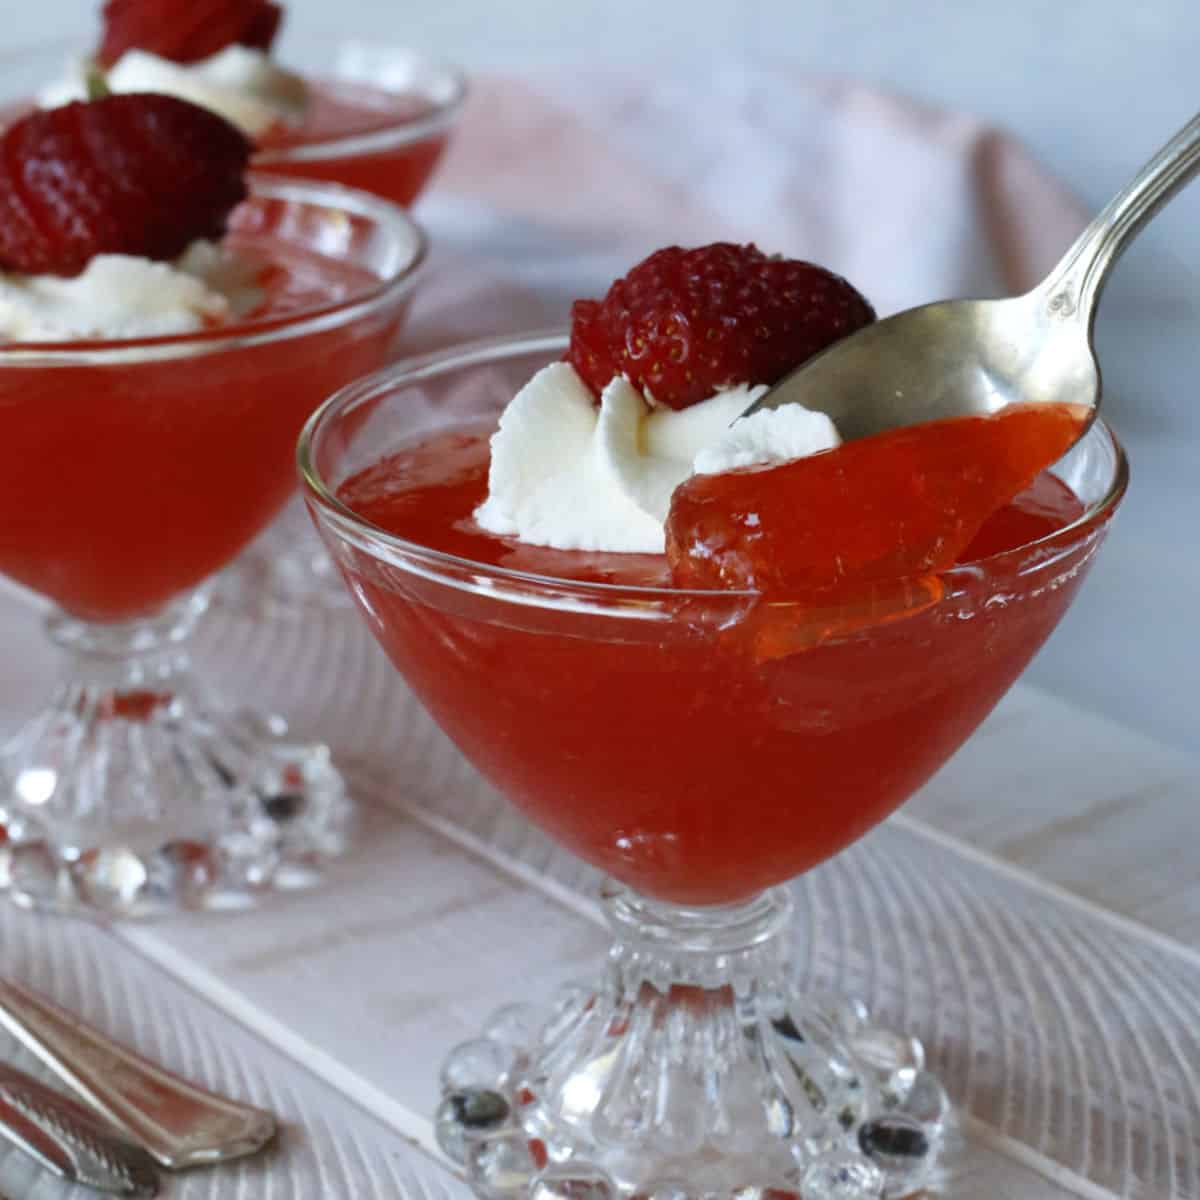 Strawberry gelee in a dessert glass.